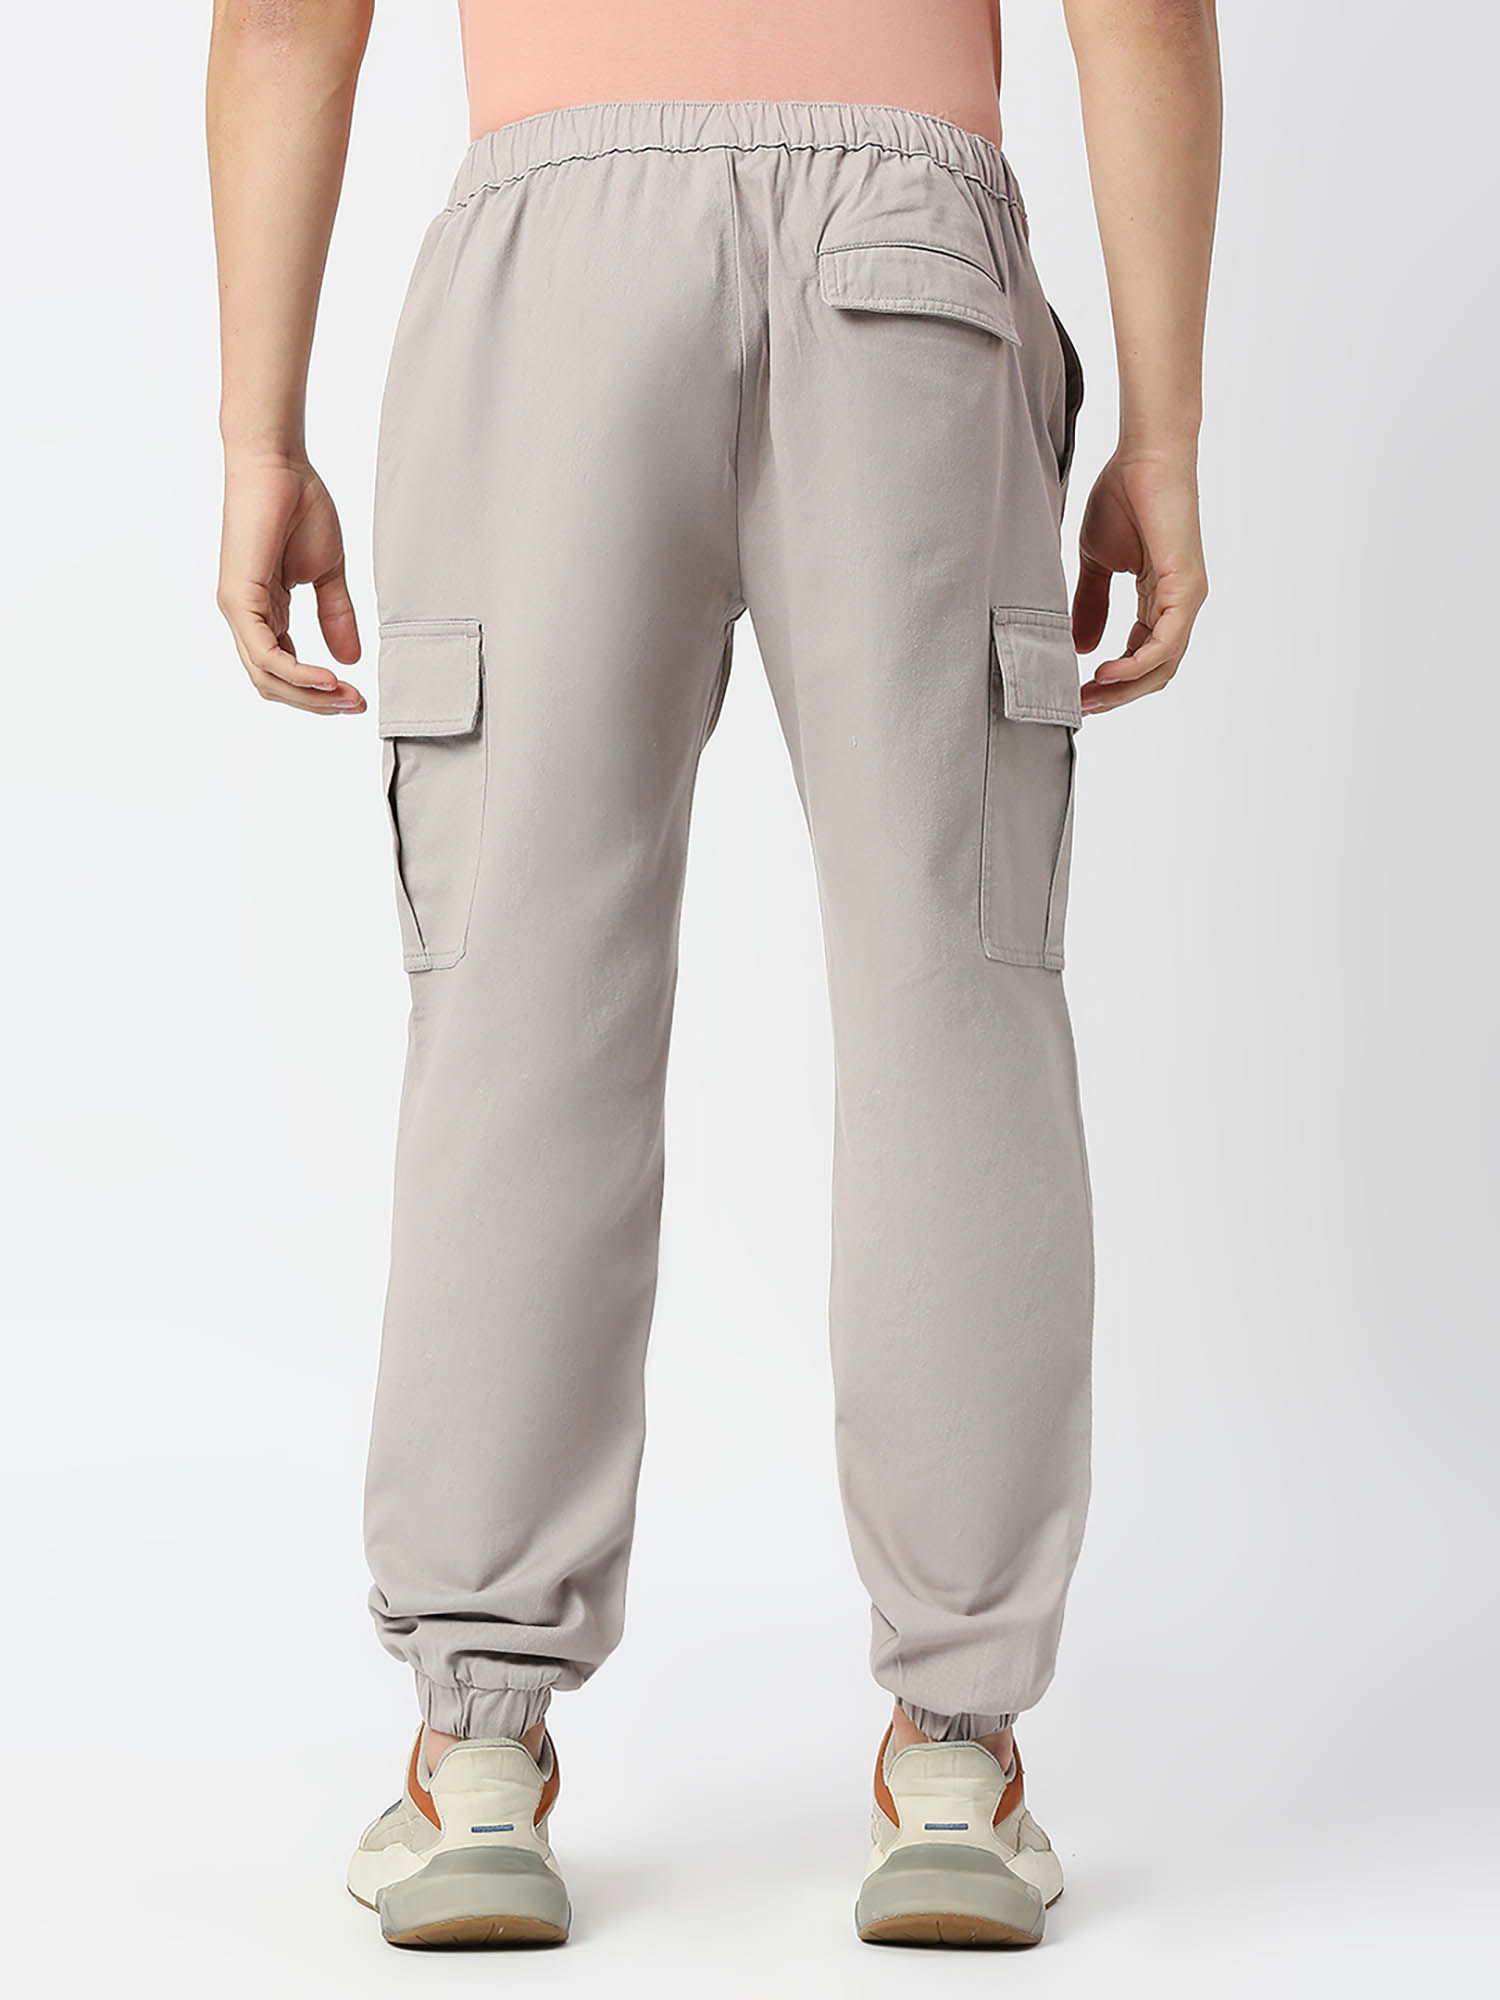 Denim & Co. Original Waist Stretch Tall Side Pocket Pants - Core - QVC.com